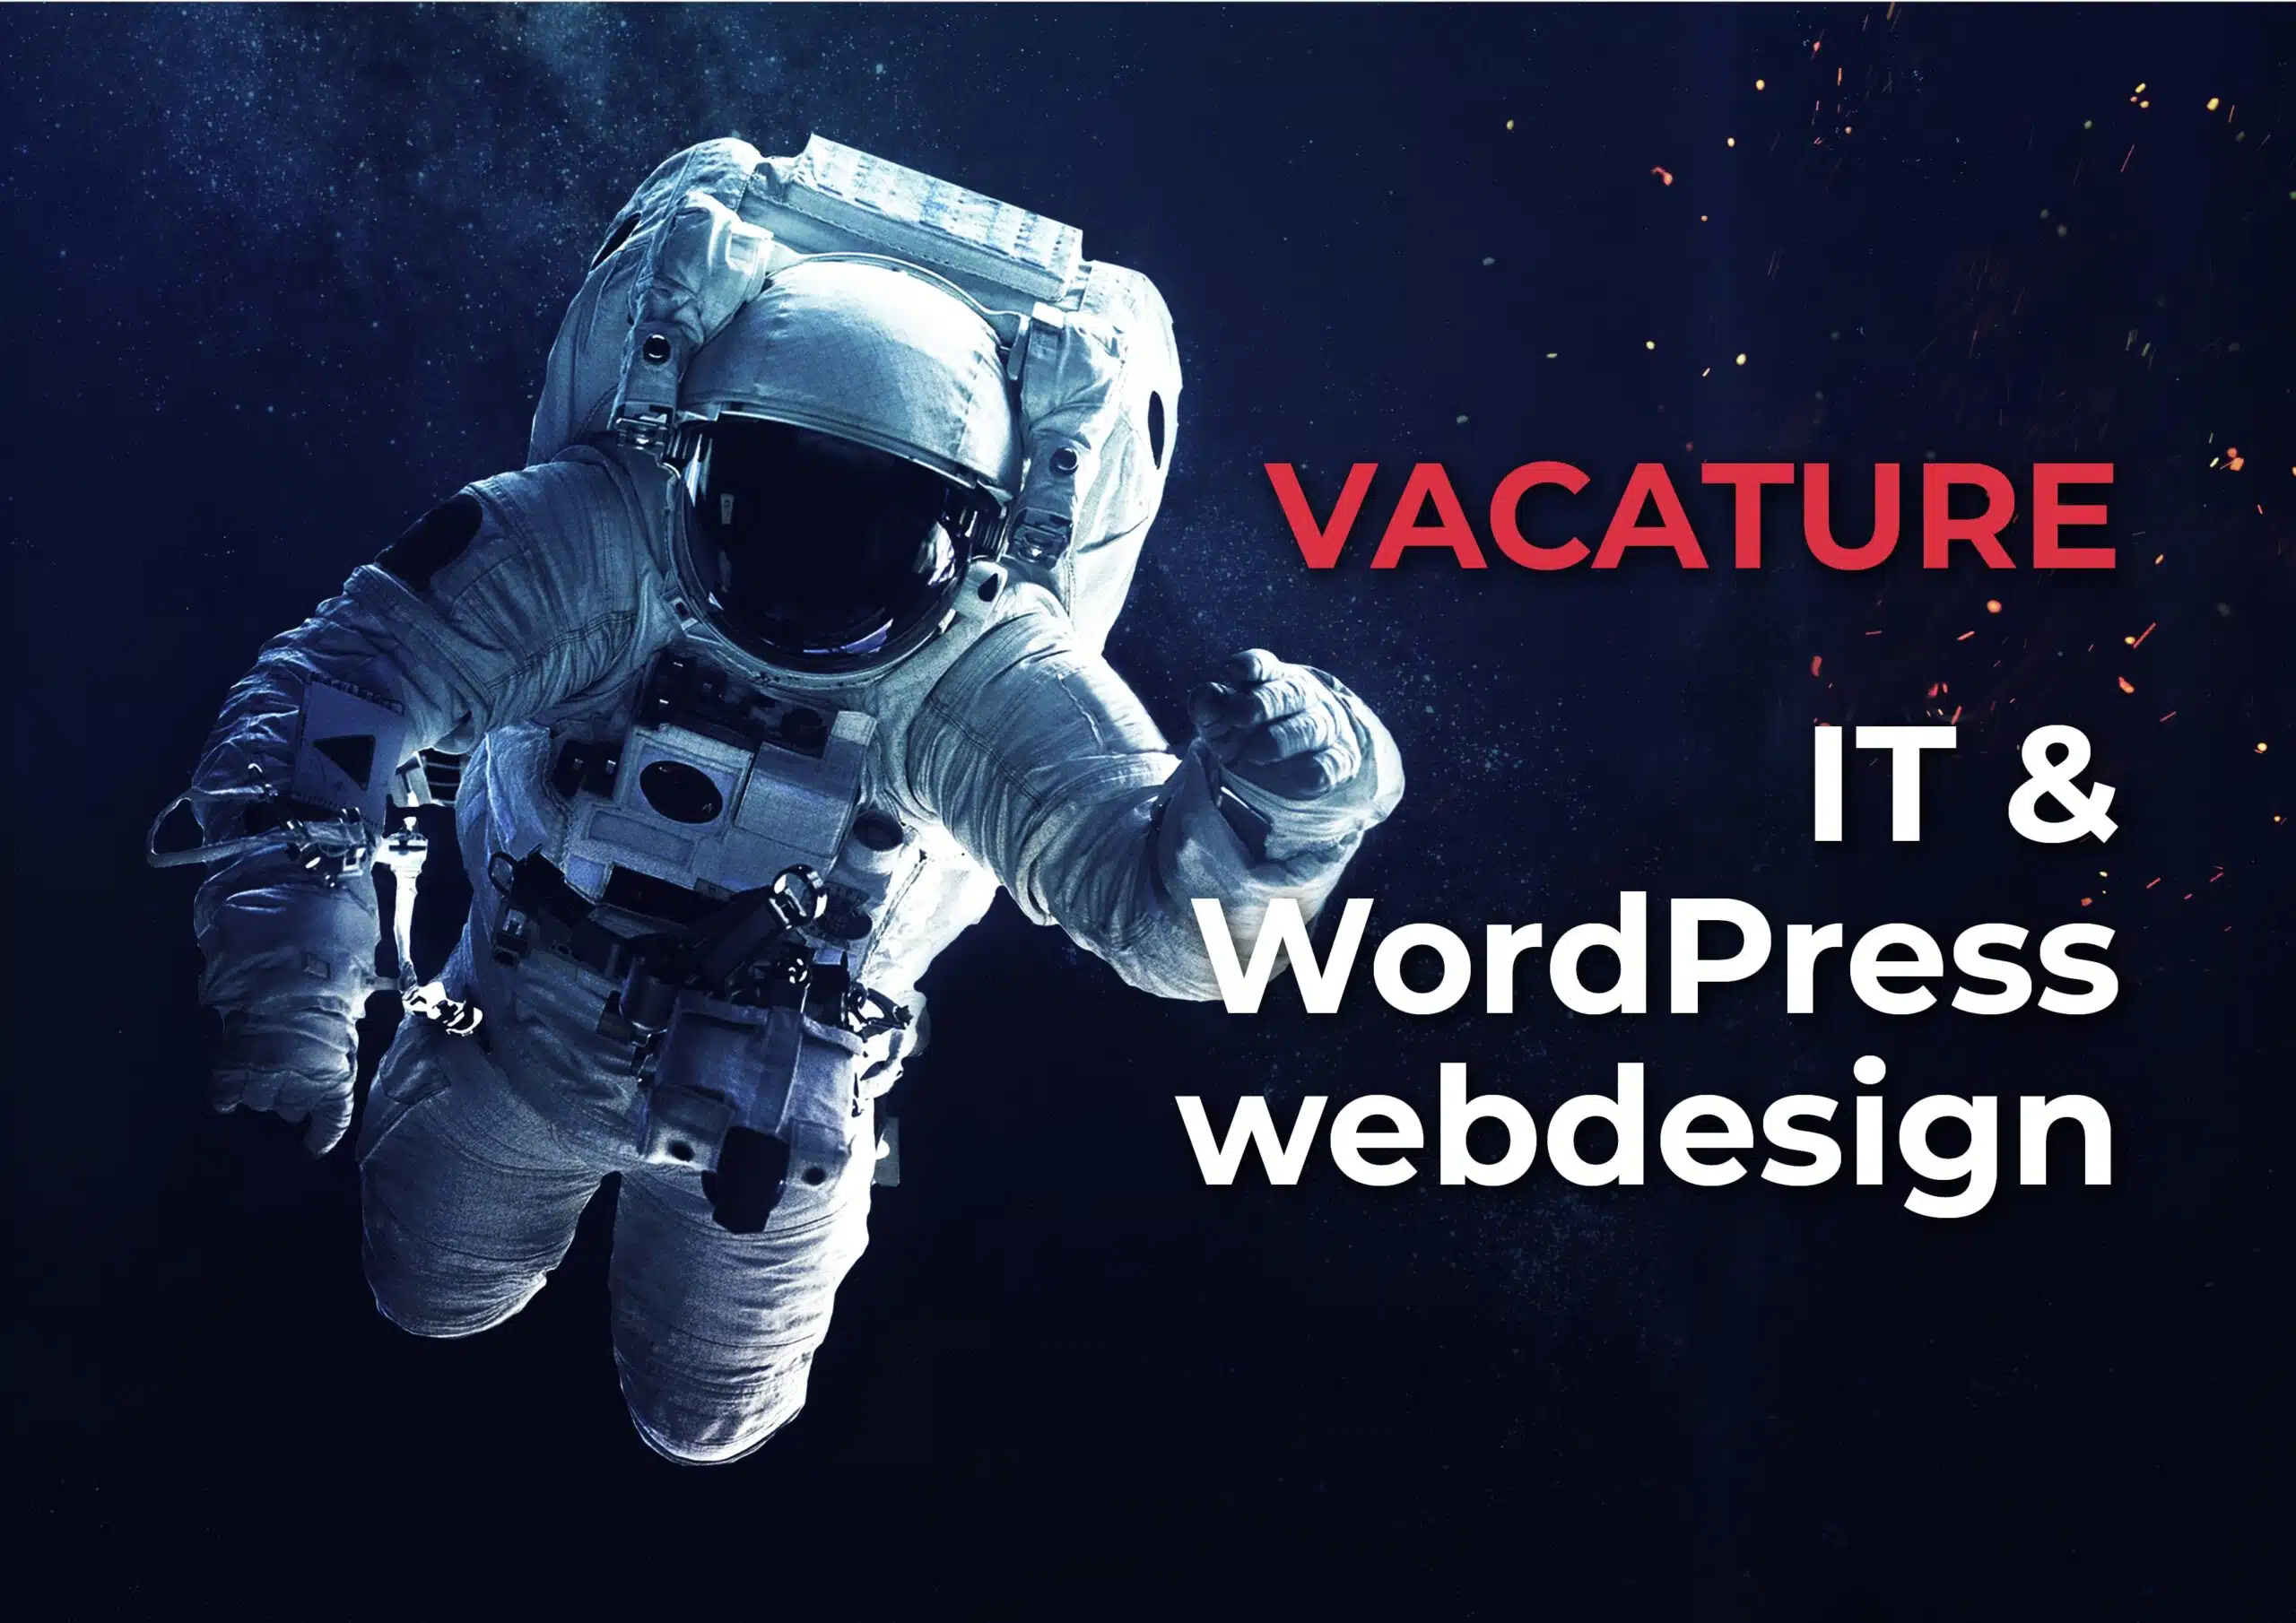 Vacature job IT WordPress Webdesign webdesigner Gent astronaut ruimte